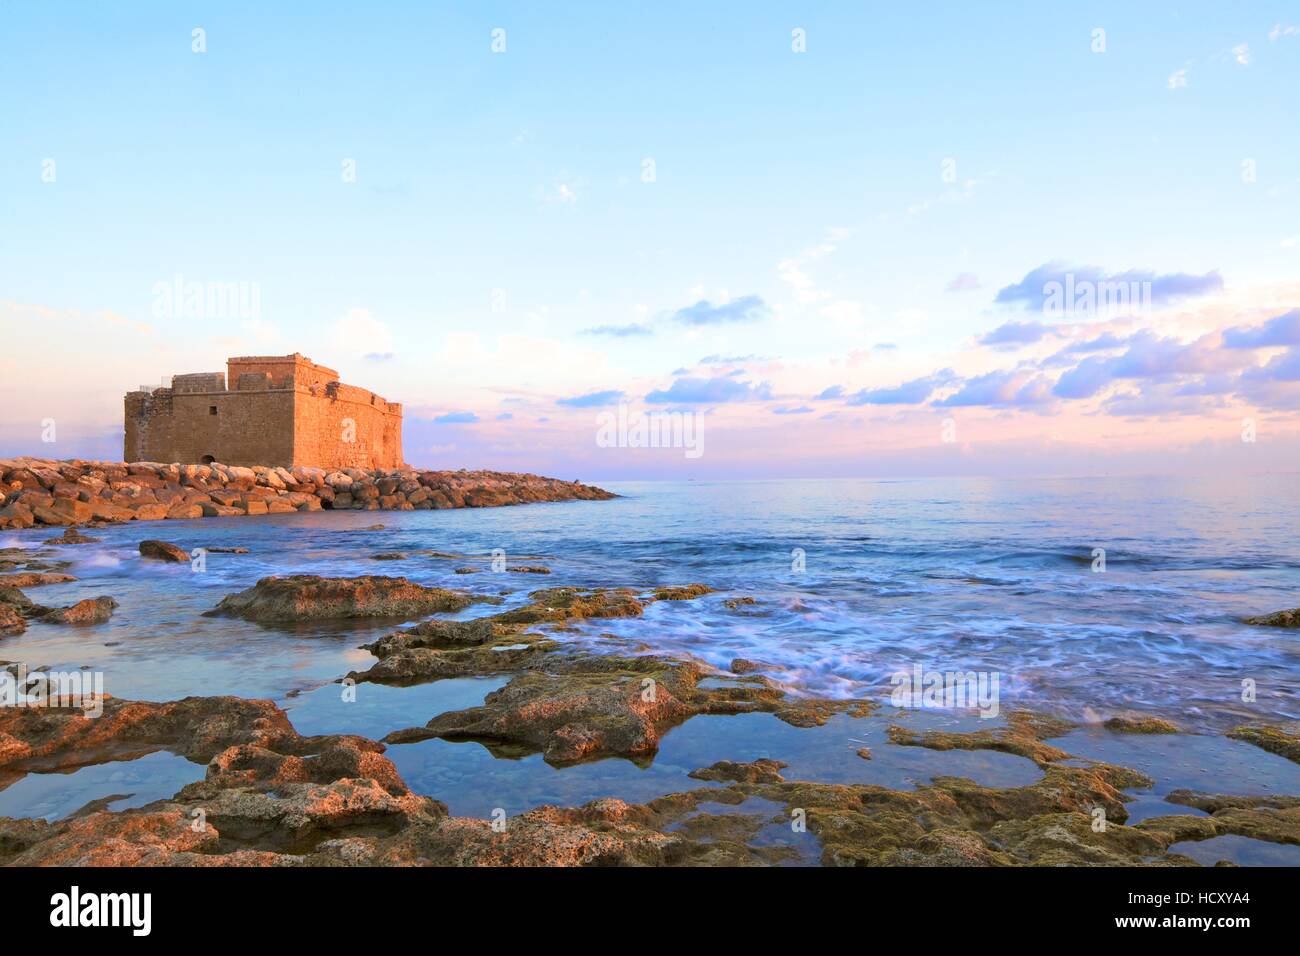 Castillo de Paphos, Paphos, Chipre, Mediterráneo Oriental Foto de stock